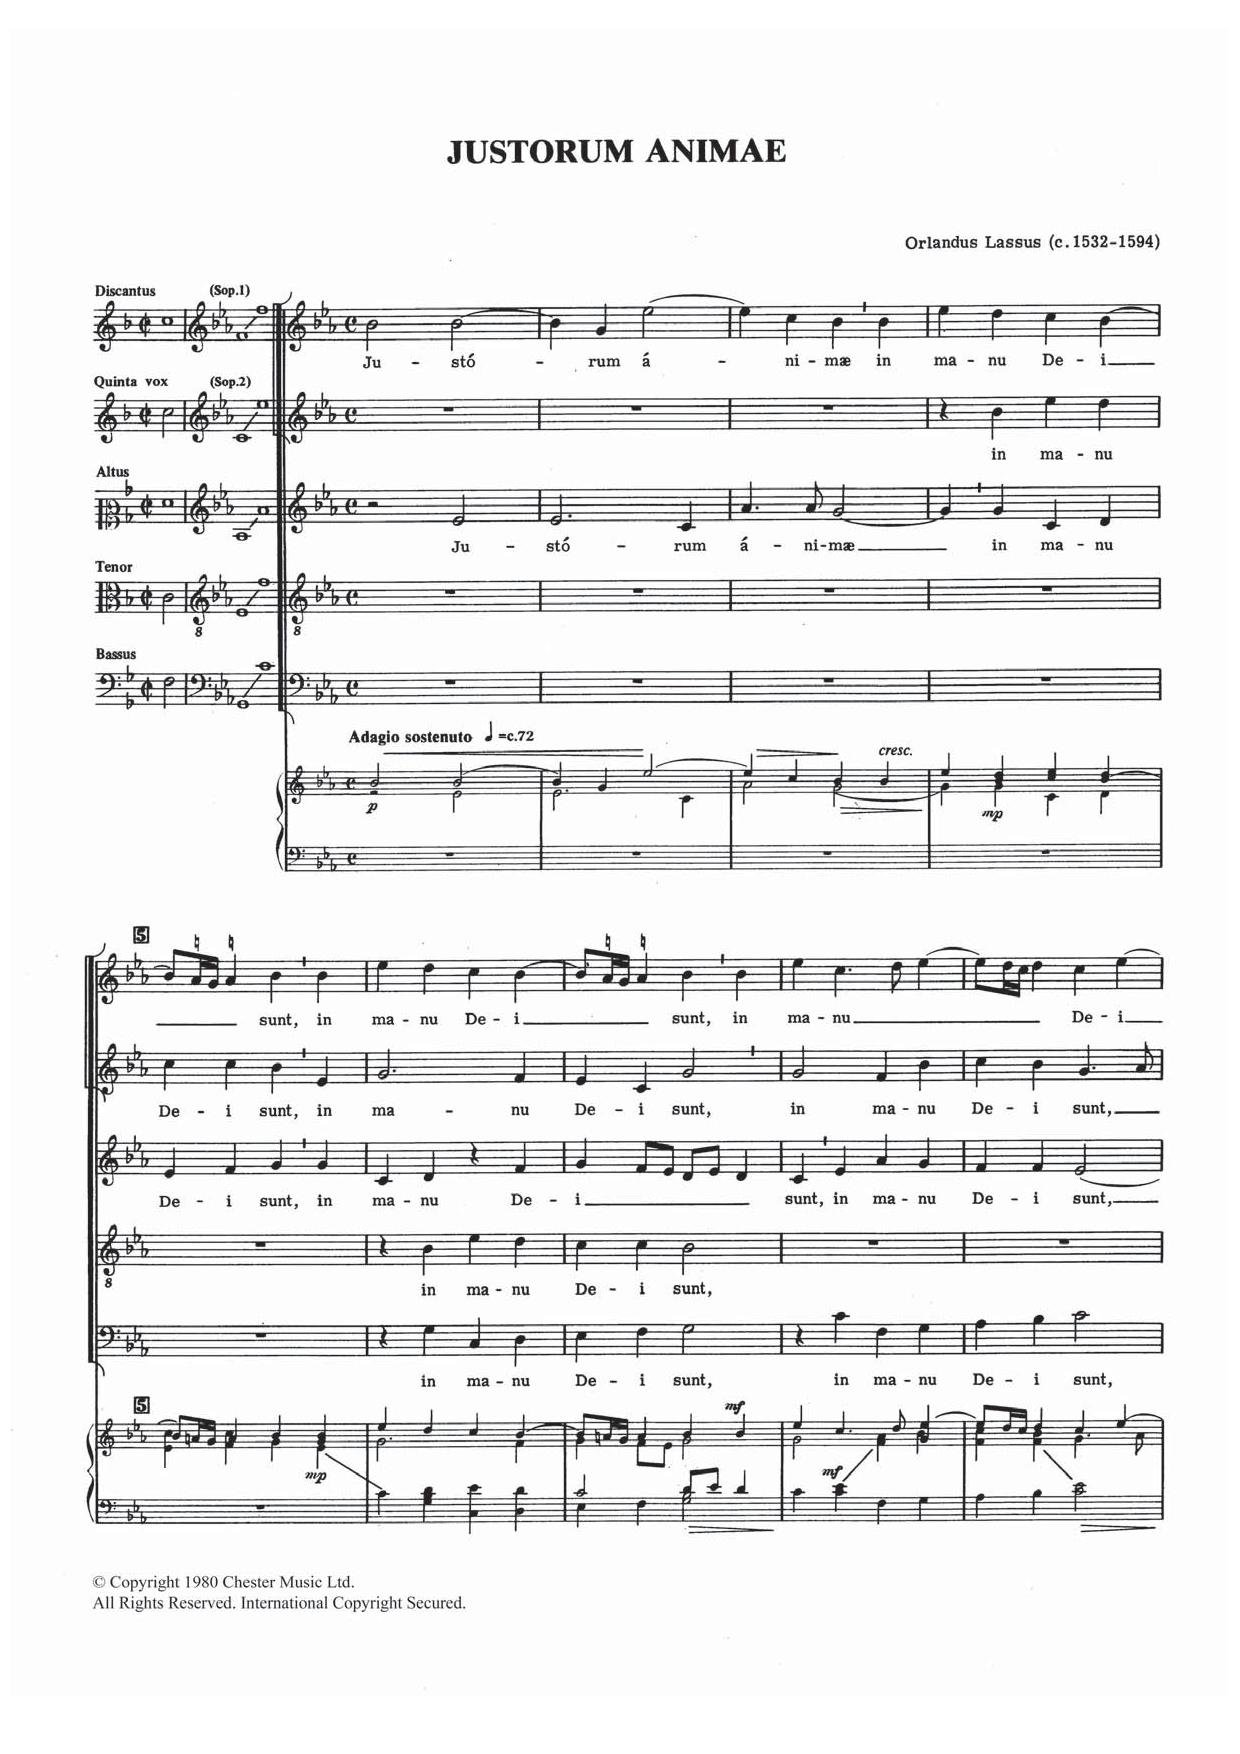 Download Orlandus Lassus Justorum Animae Sheet Music